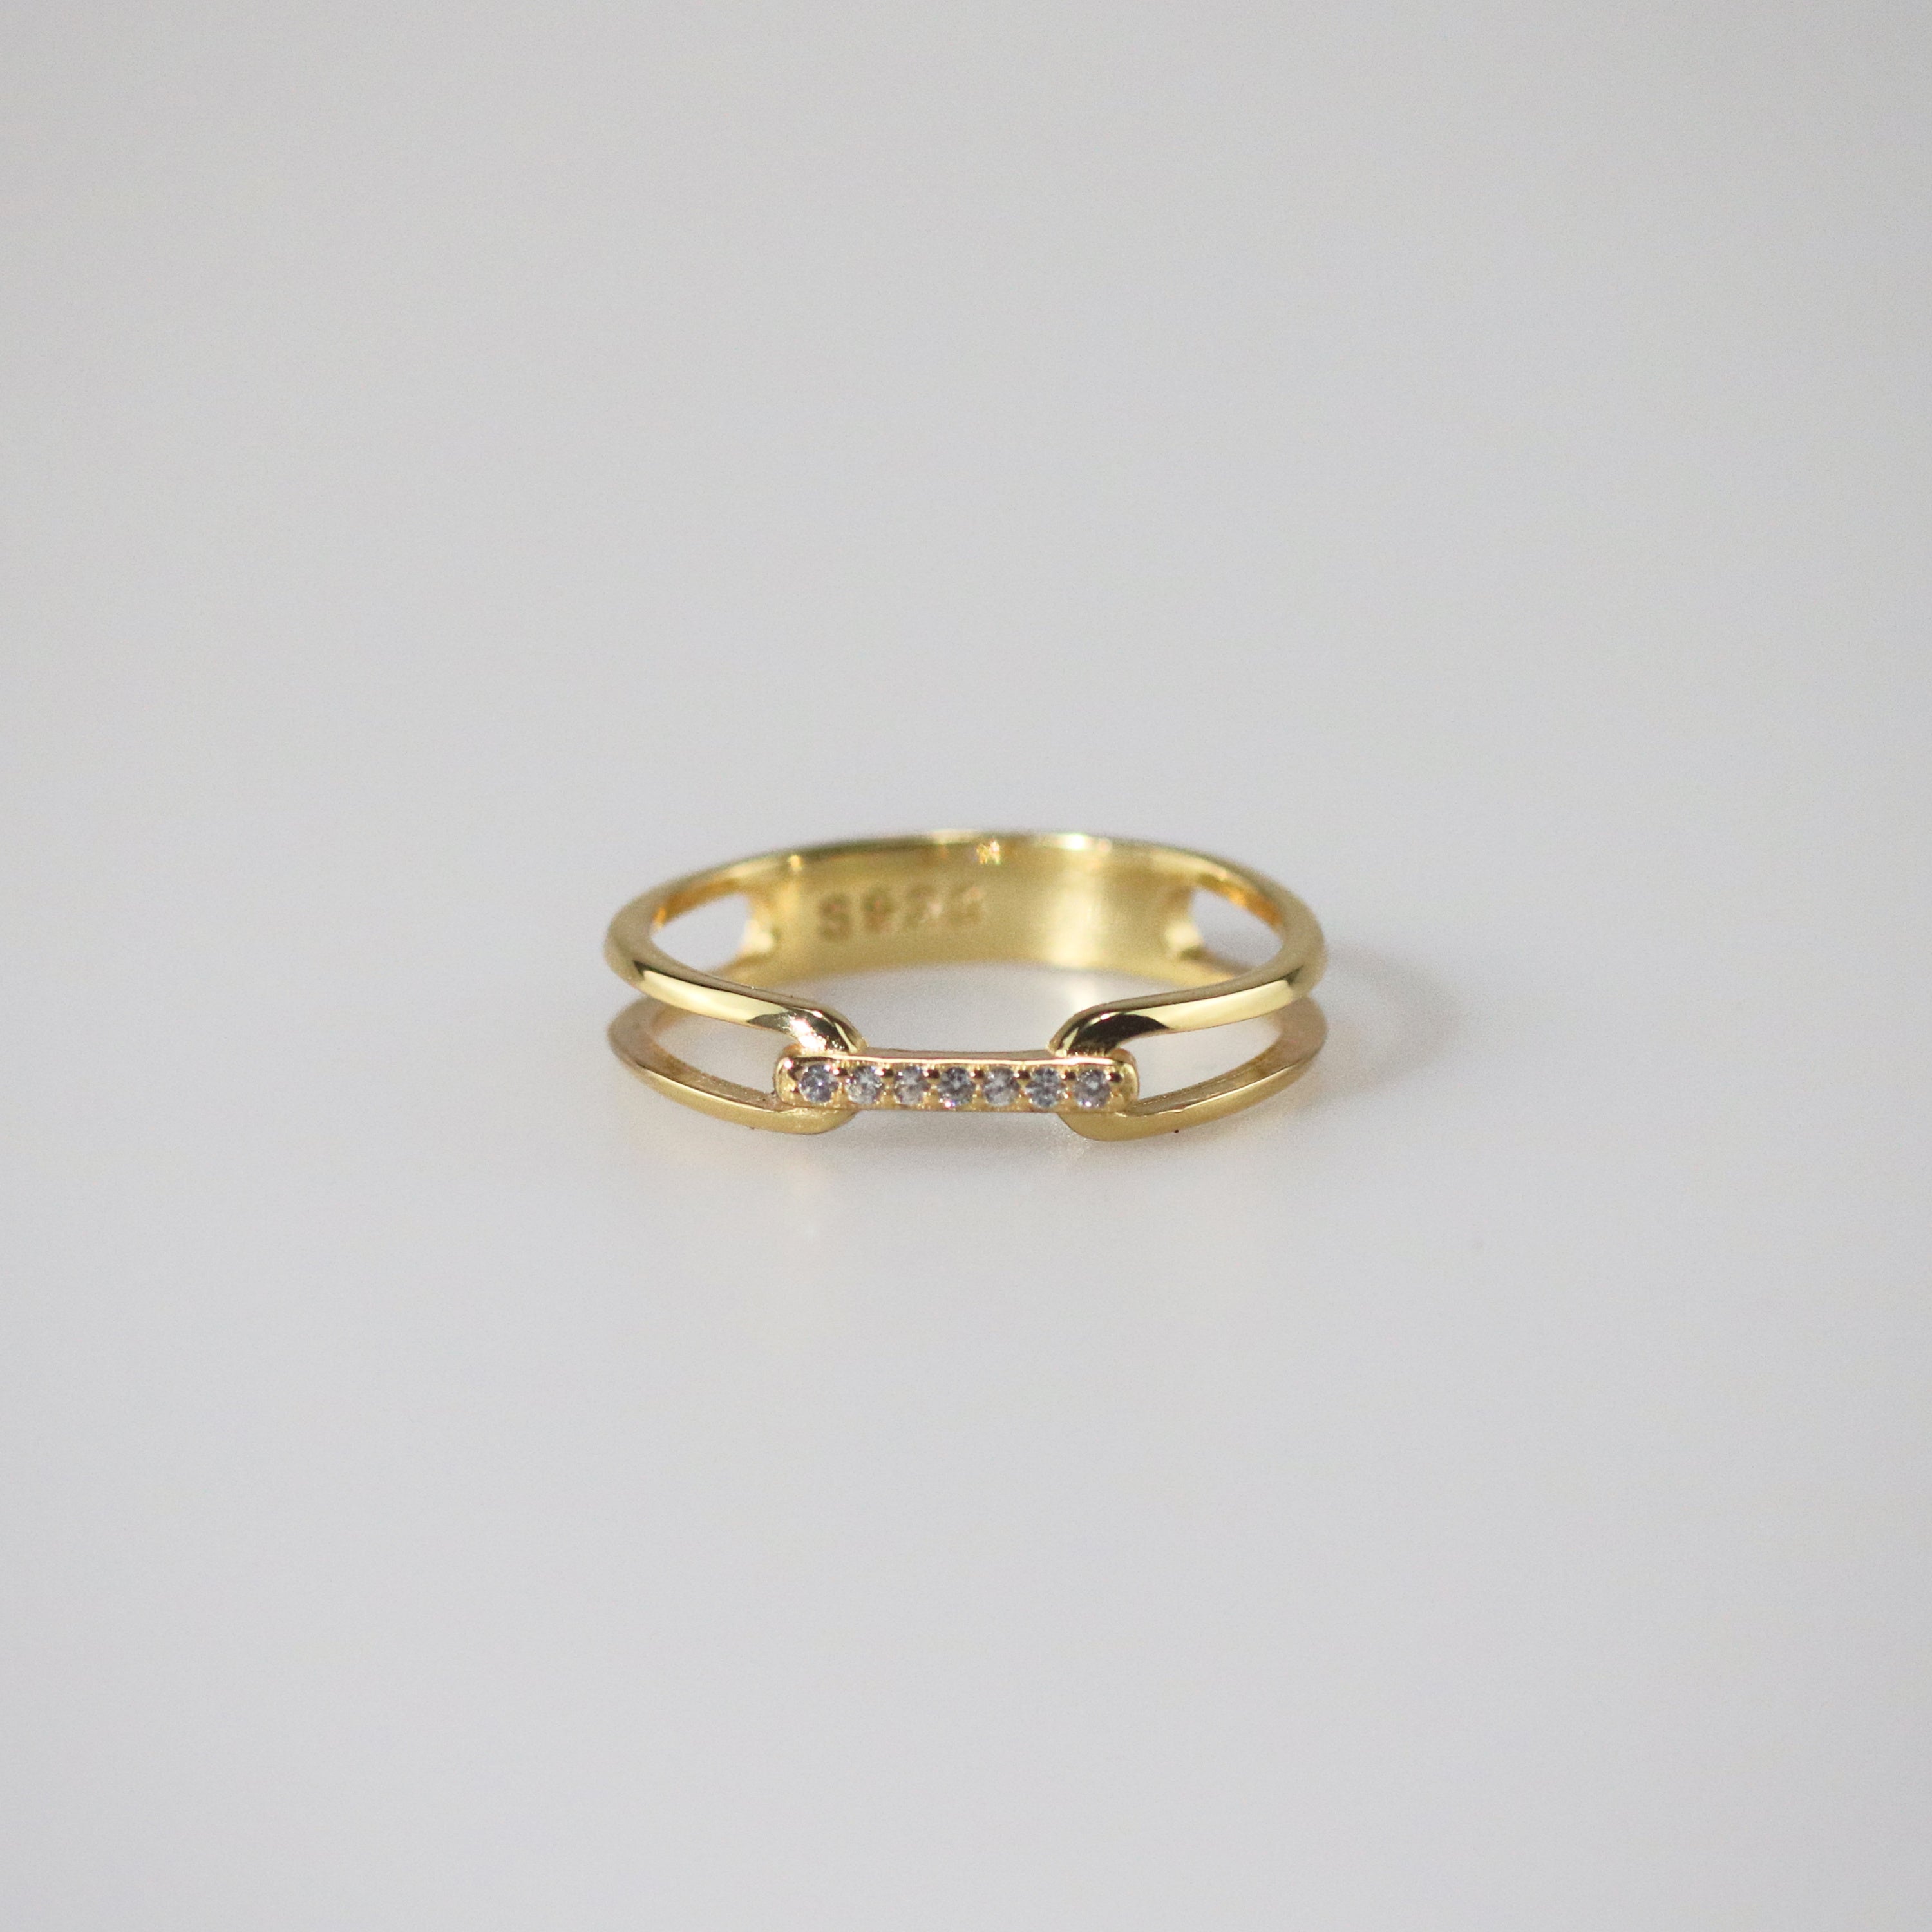 Meideya Jewelry gold vermeil stackable ring